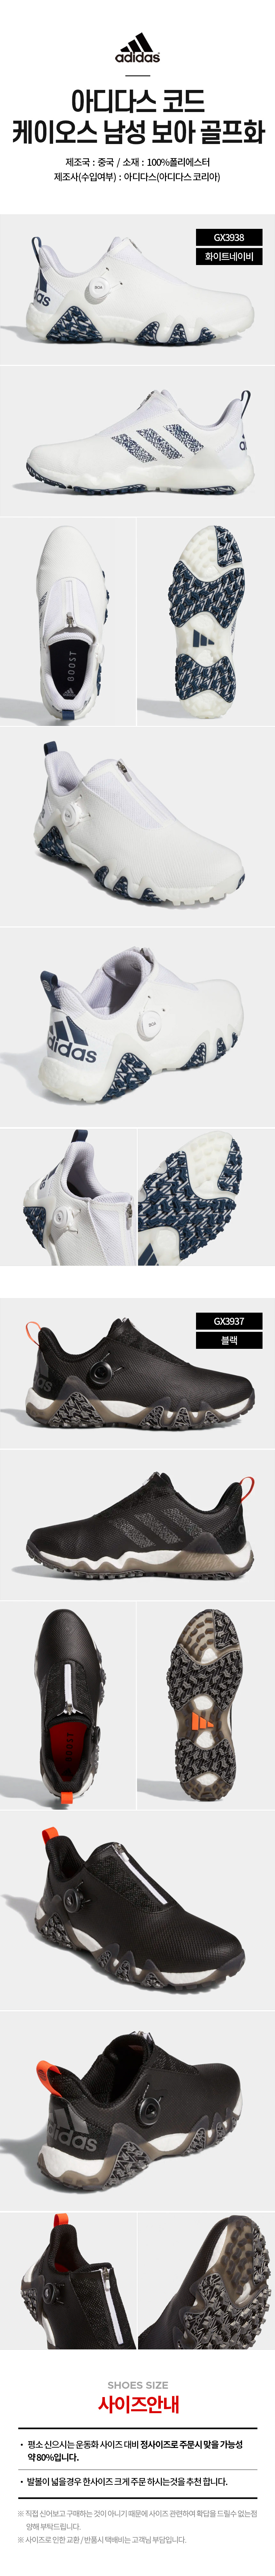 adidas_keios_golf_shoes_22.jpg